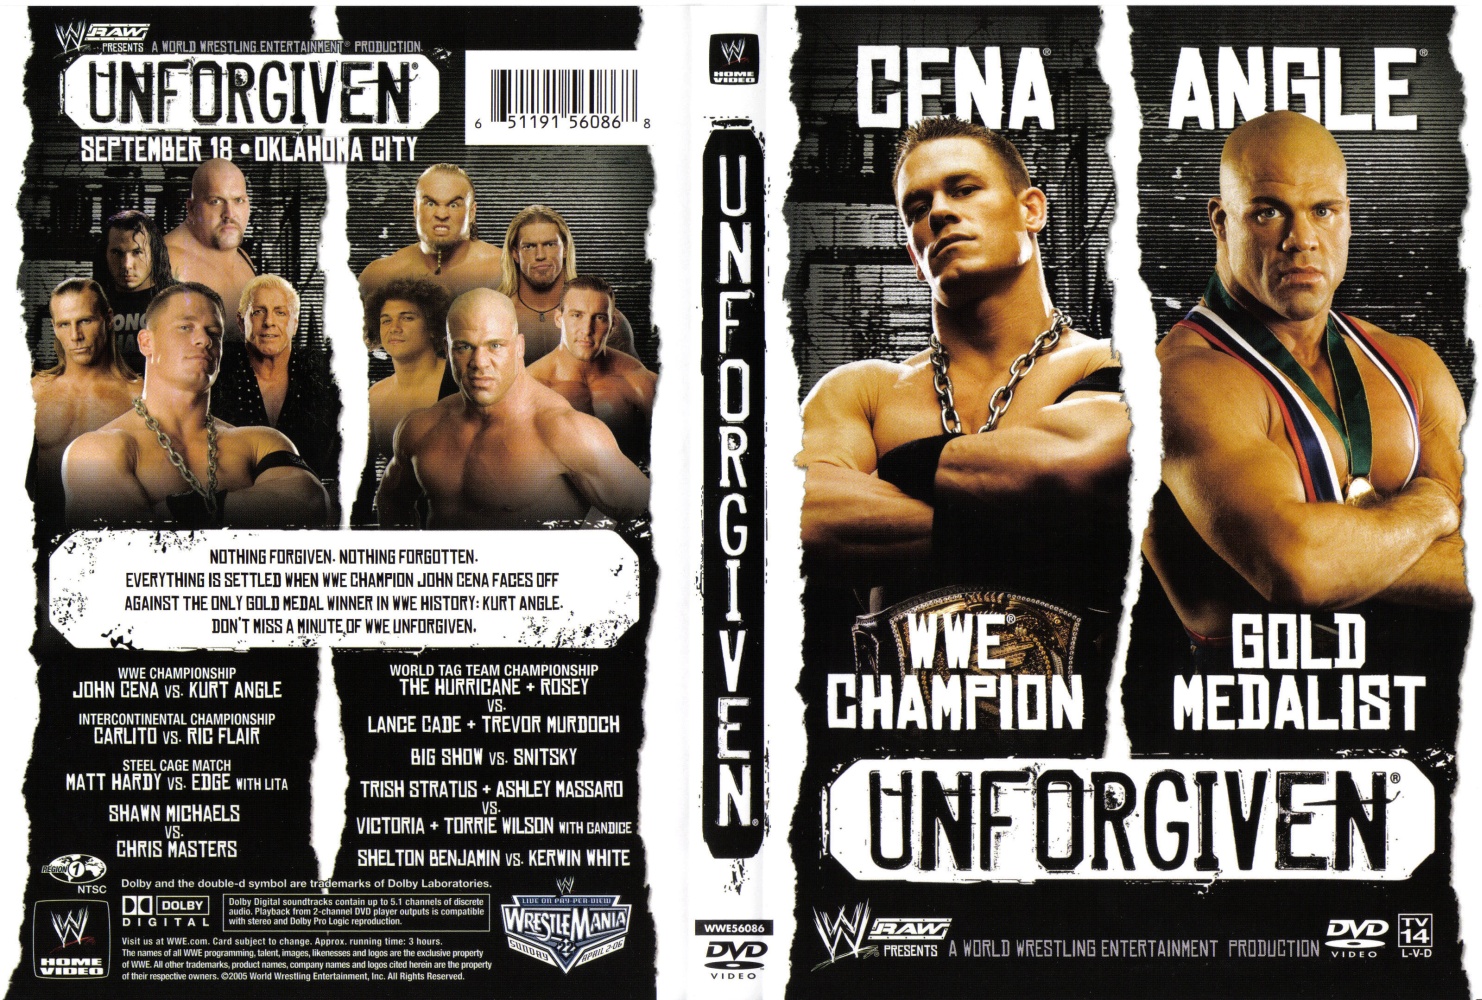 Jaquette DVD WWE Unforgiven 2005